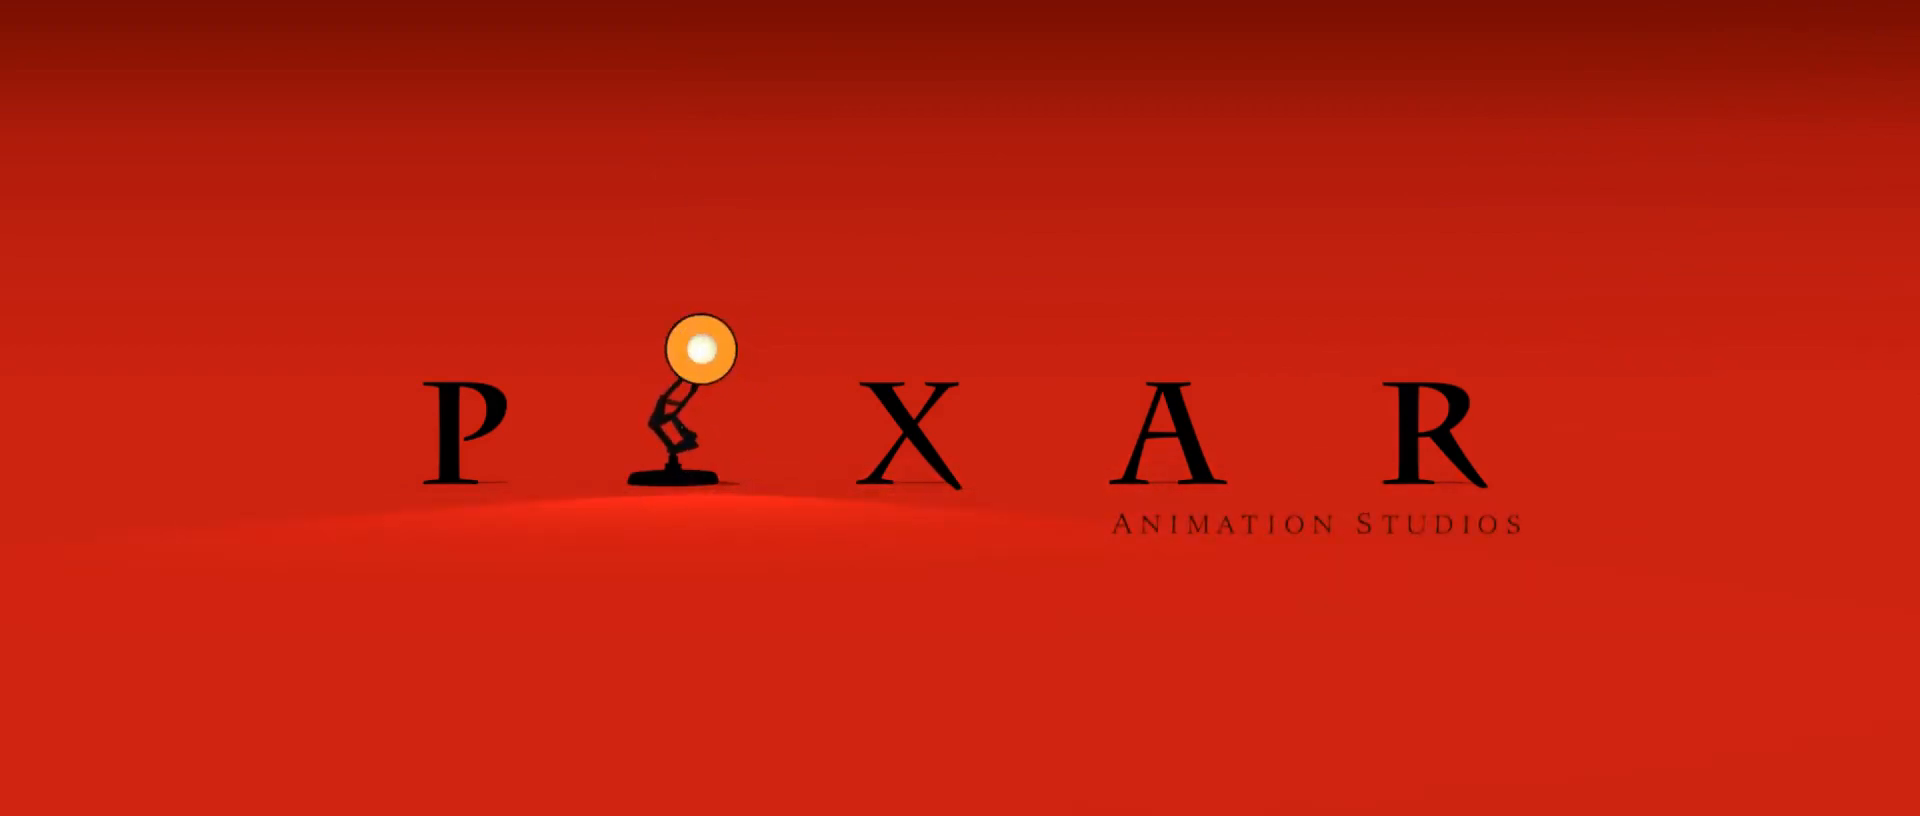 Pixar logo (Incredibles 1 Variant) by Blakeharris02 on DeviantArt